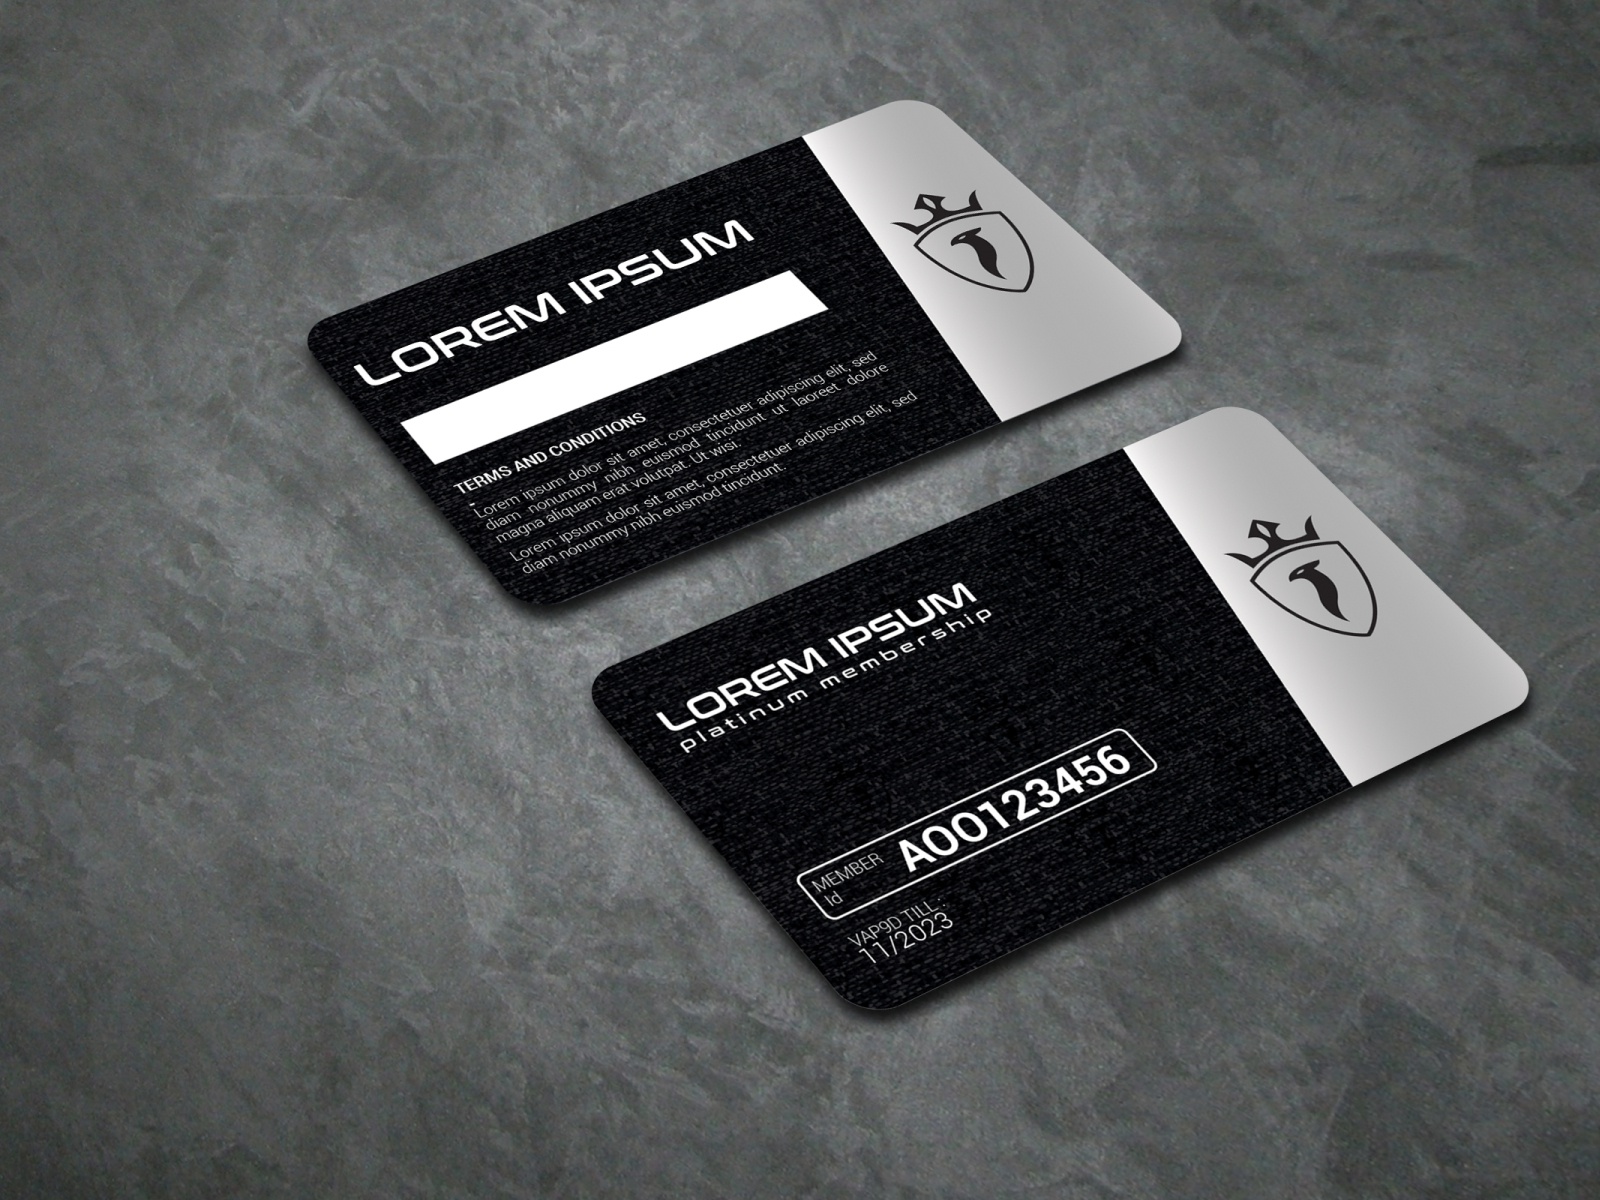 Membership card design by Greenmanbd on Dribbble